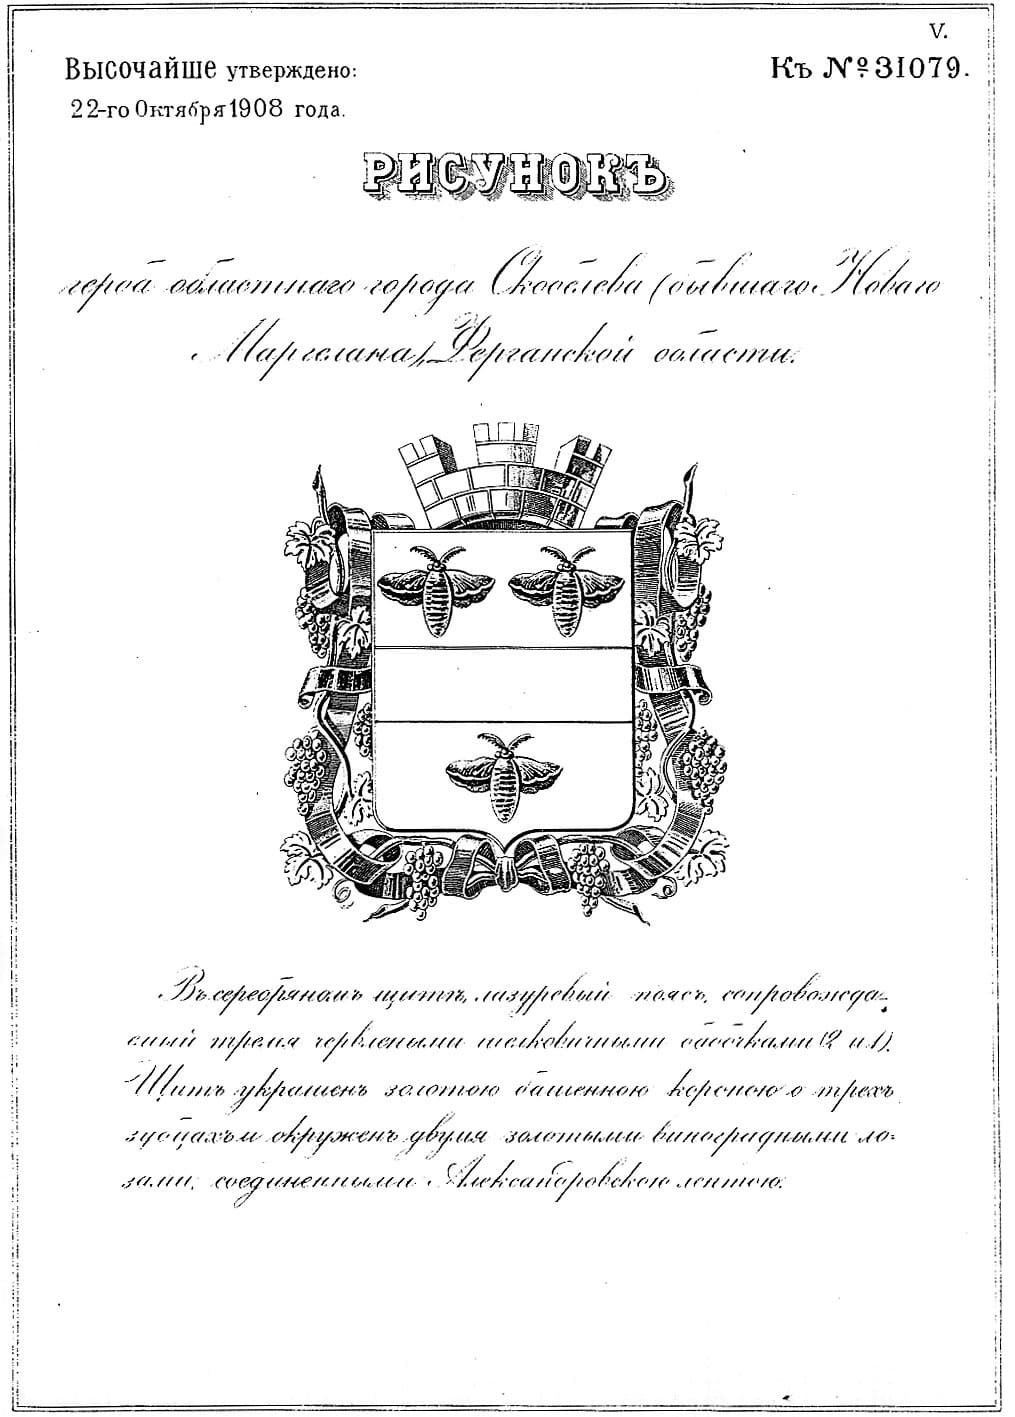 Coat of arms of the Fergana region Герб Ферганской области.jpg